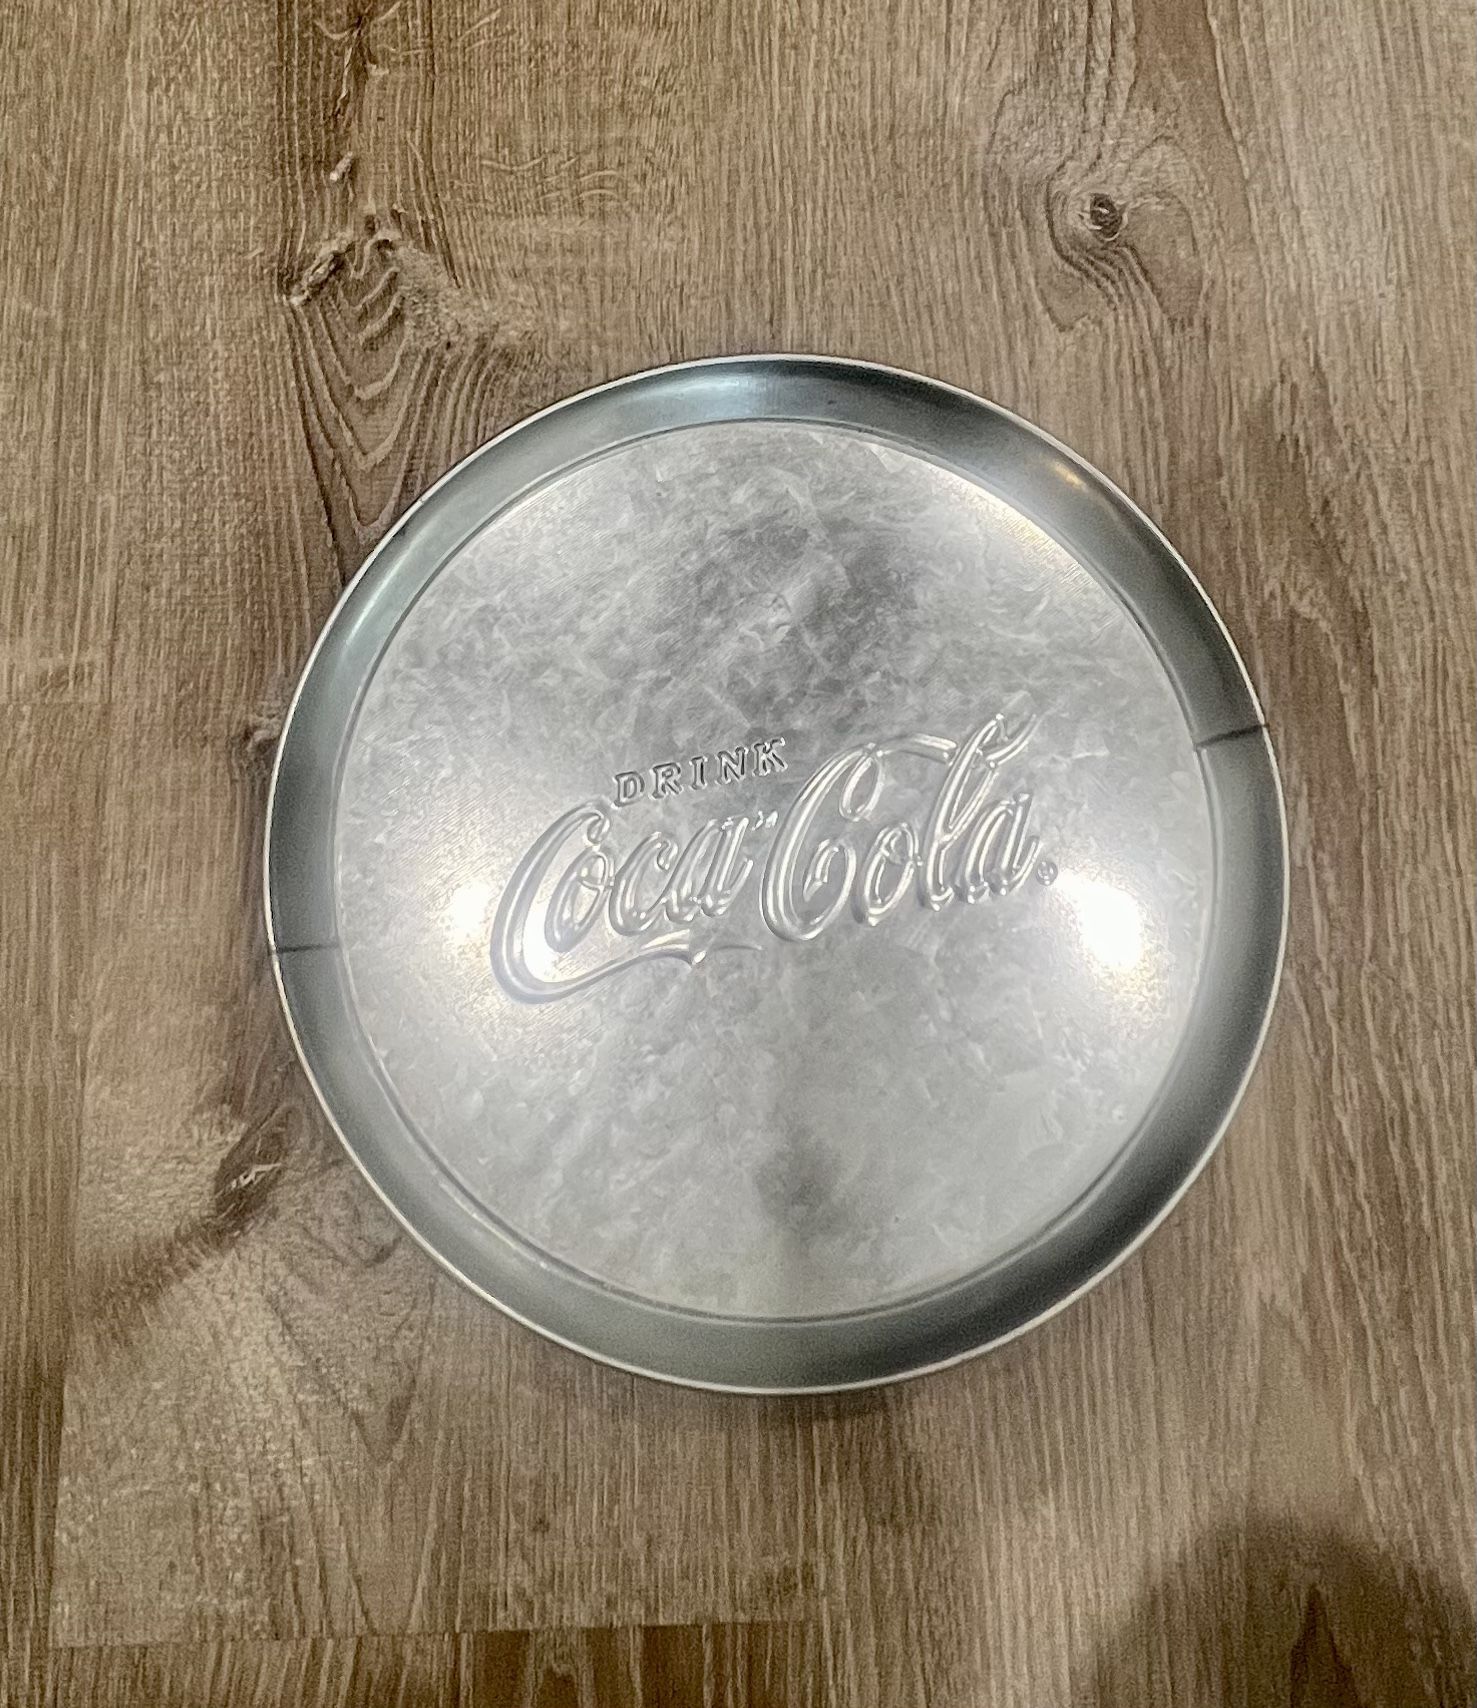 Coca-Cola Silver Serving Trays